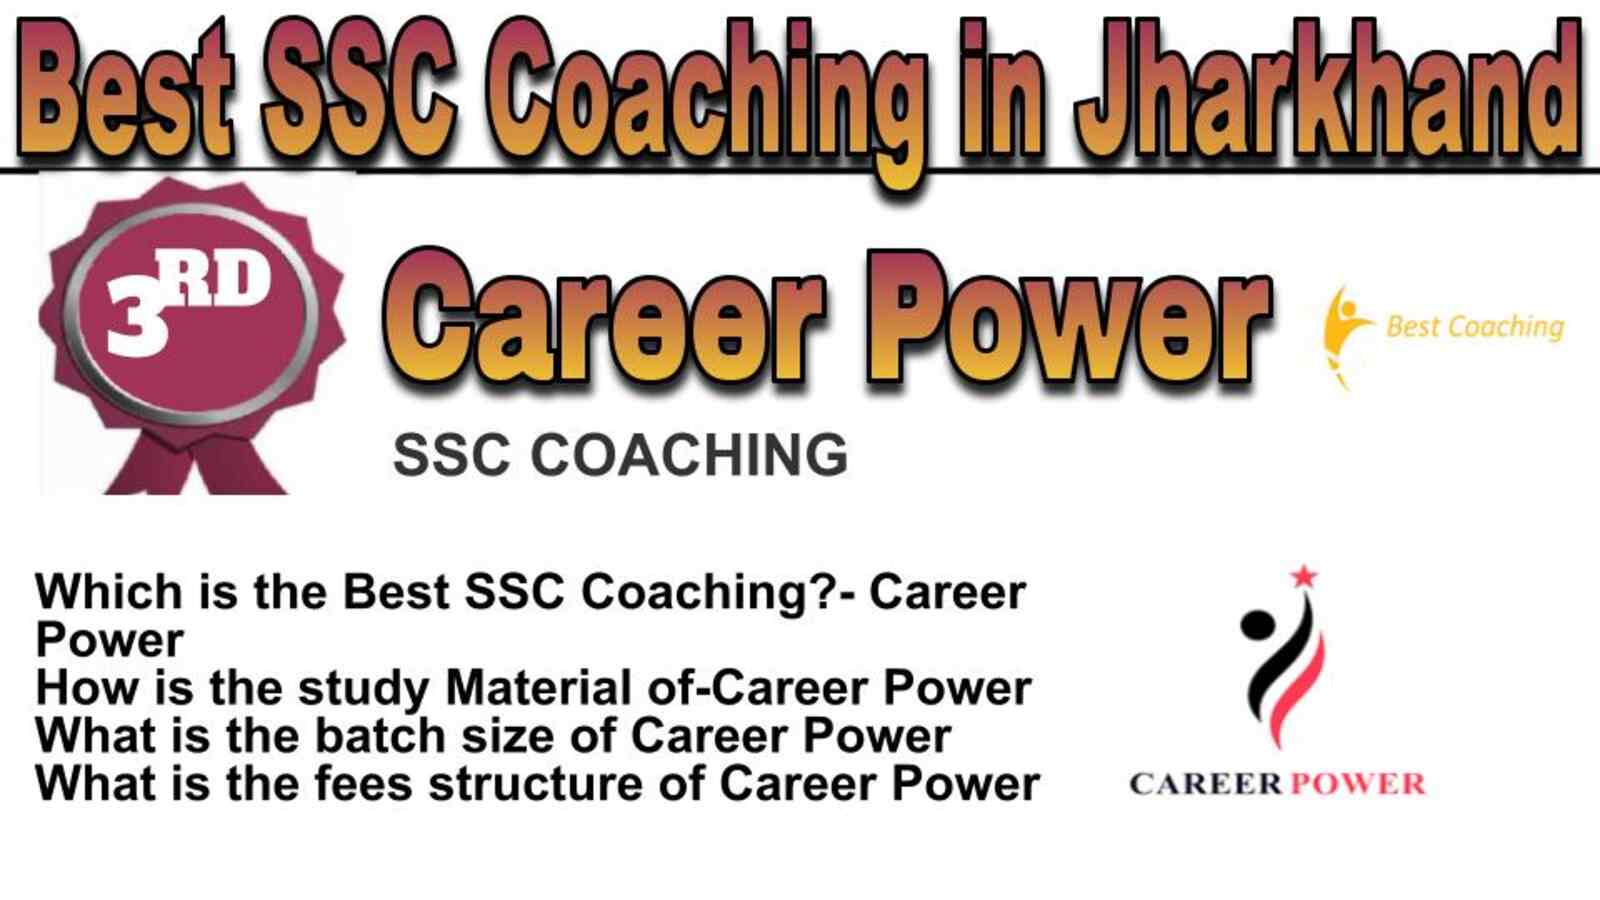 Rank 3 best SSC coaching in Jharkhand